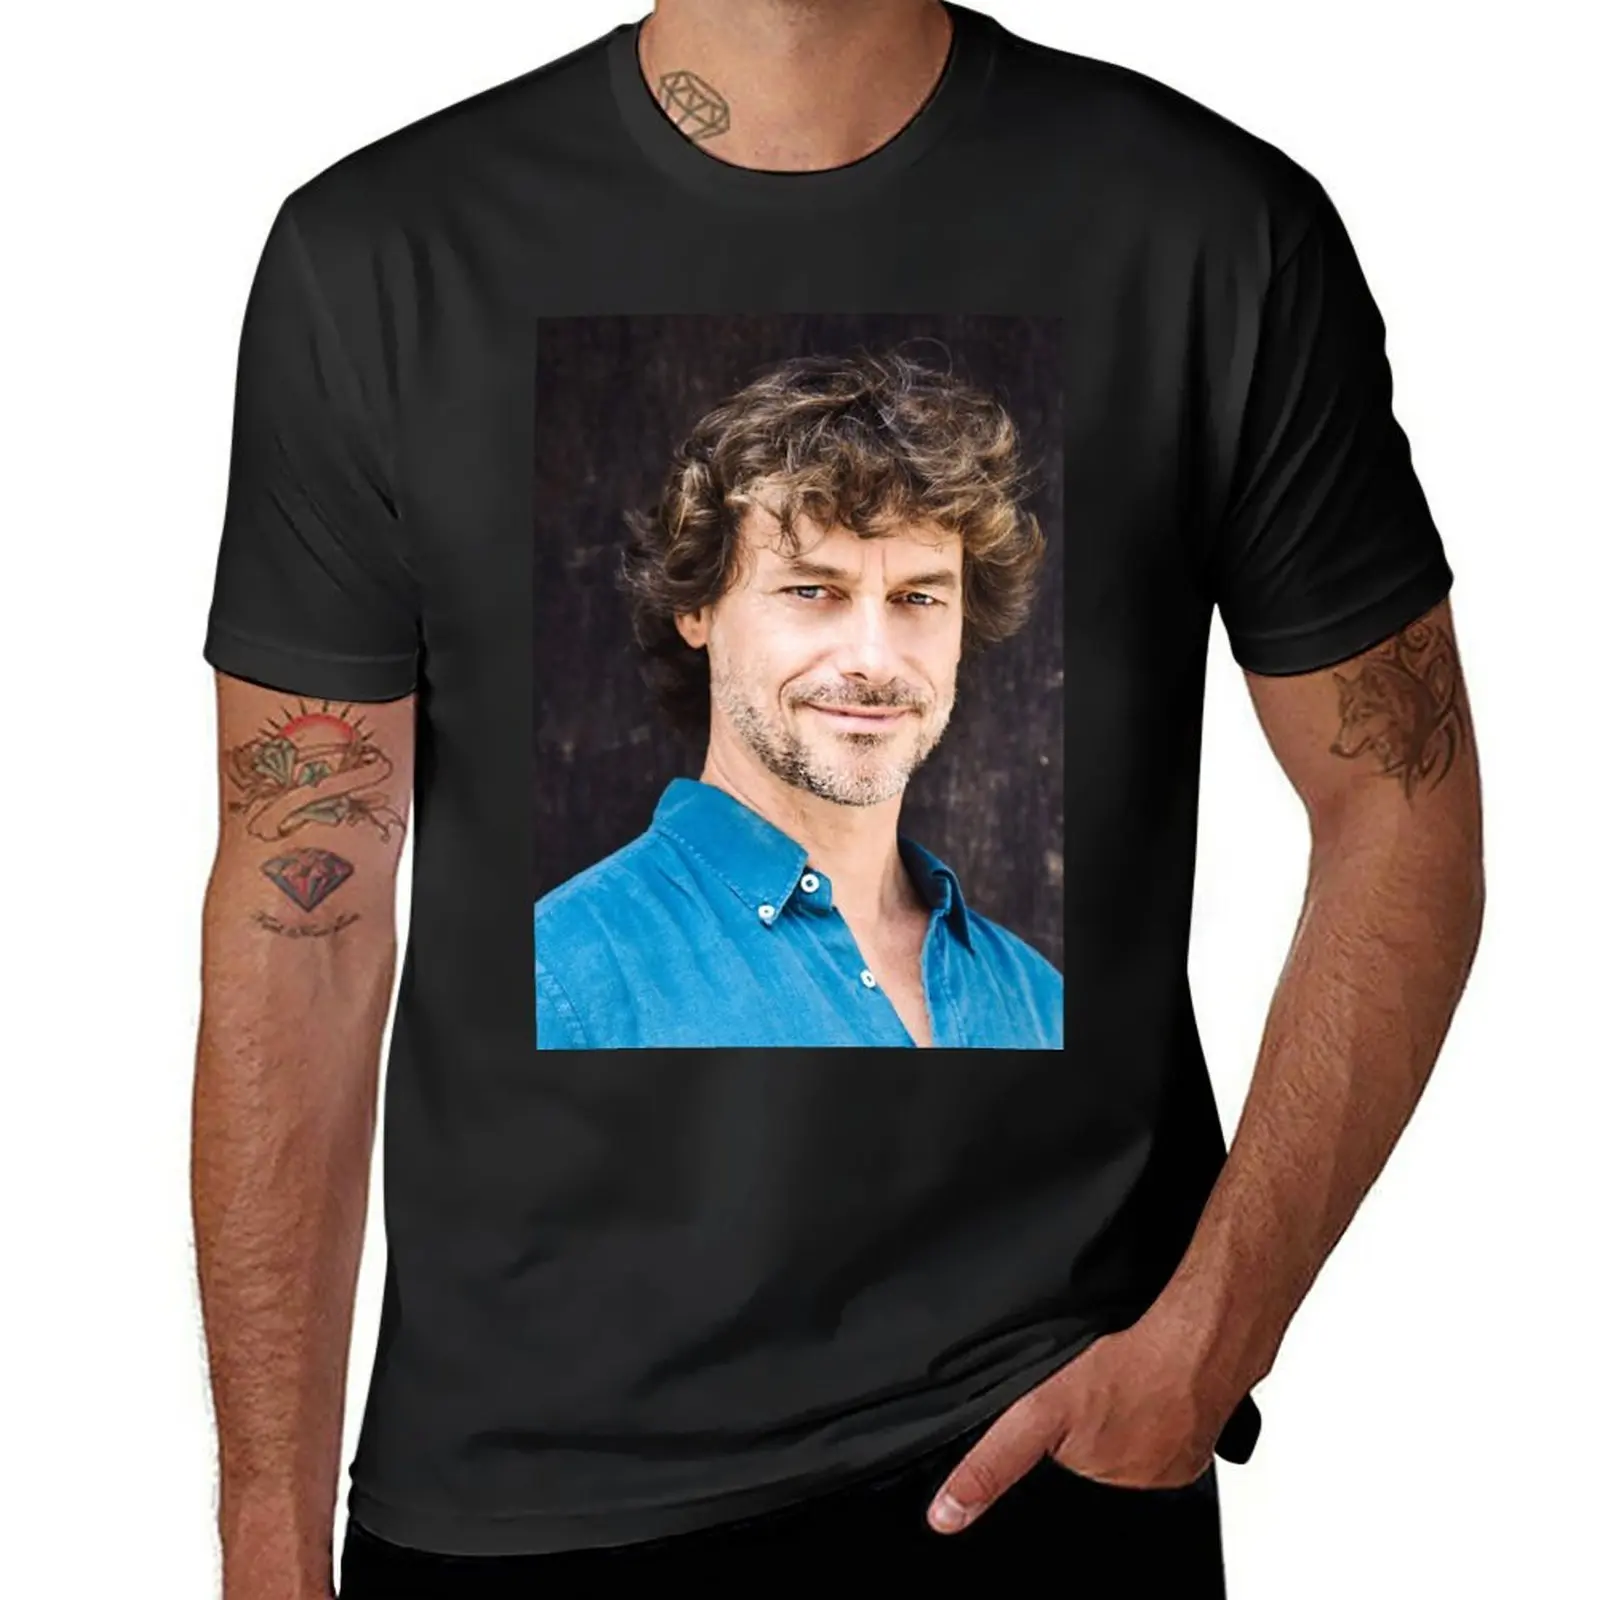 New Alberto Angela - divulgo forte! T-Shirt shirts graphic tees graphics t shirt plus size tops mens big and tall t shirts